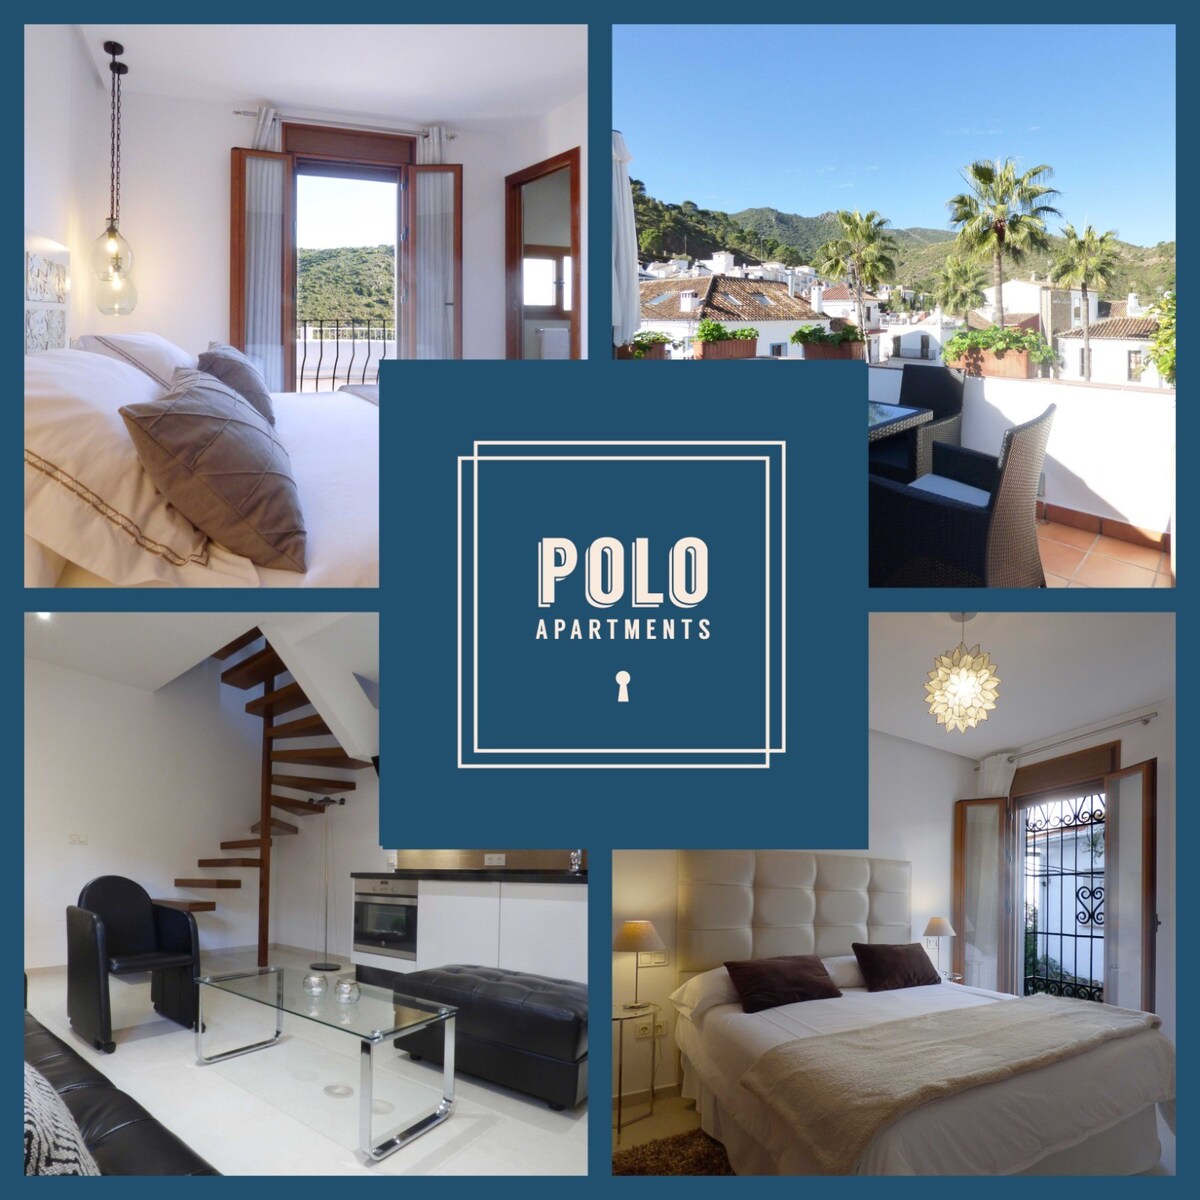 Polo Apartments, Benahavis